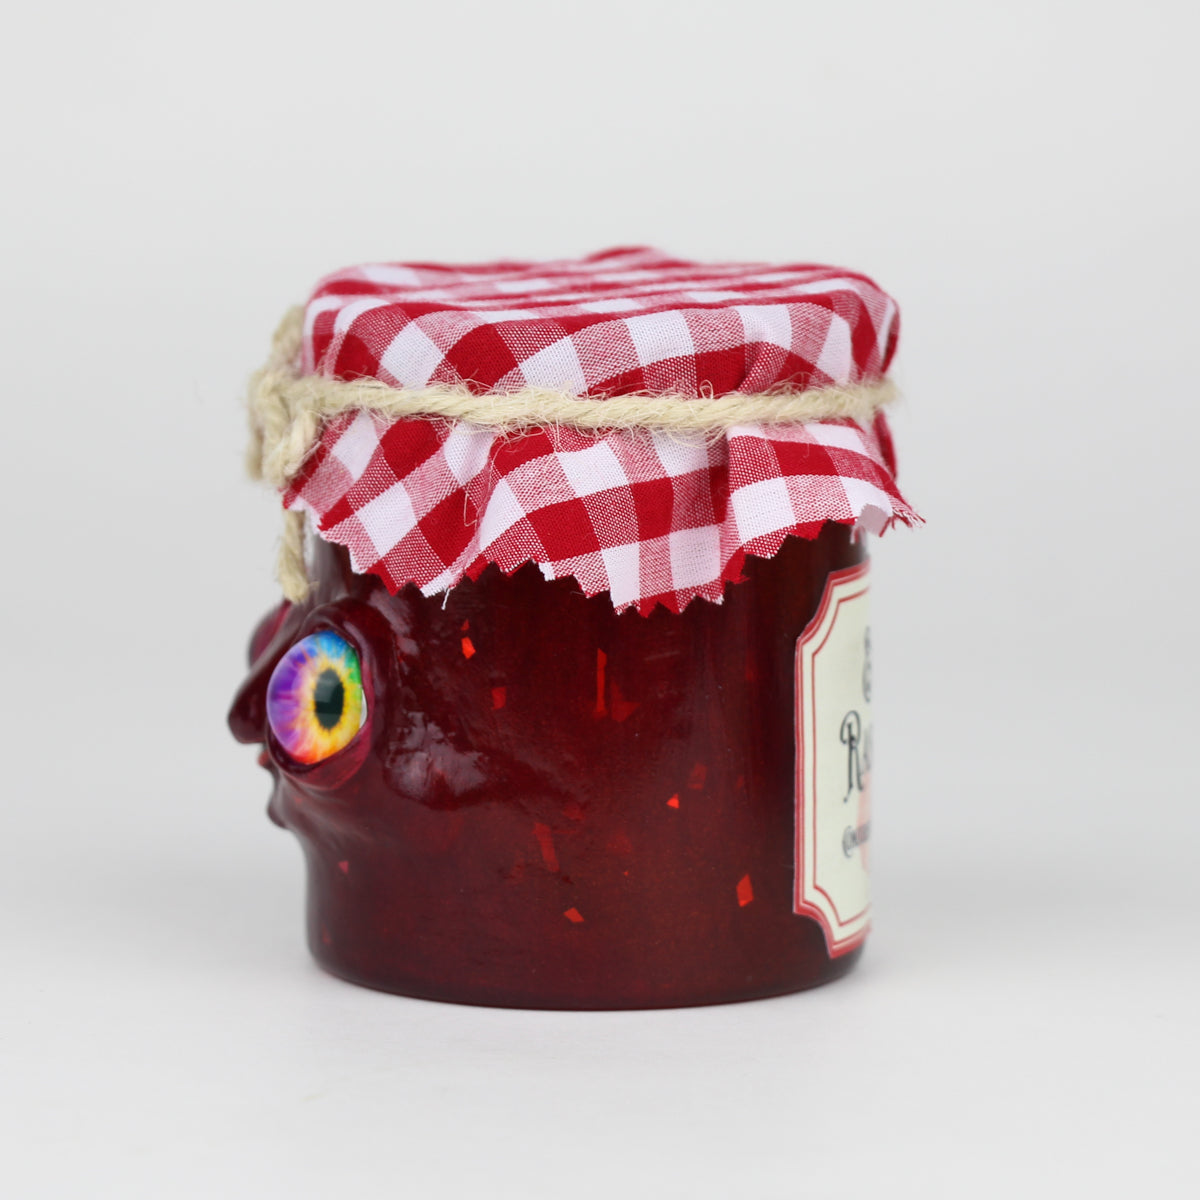 Razzle the Enchanted Raspberry Jam Jar